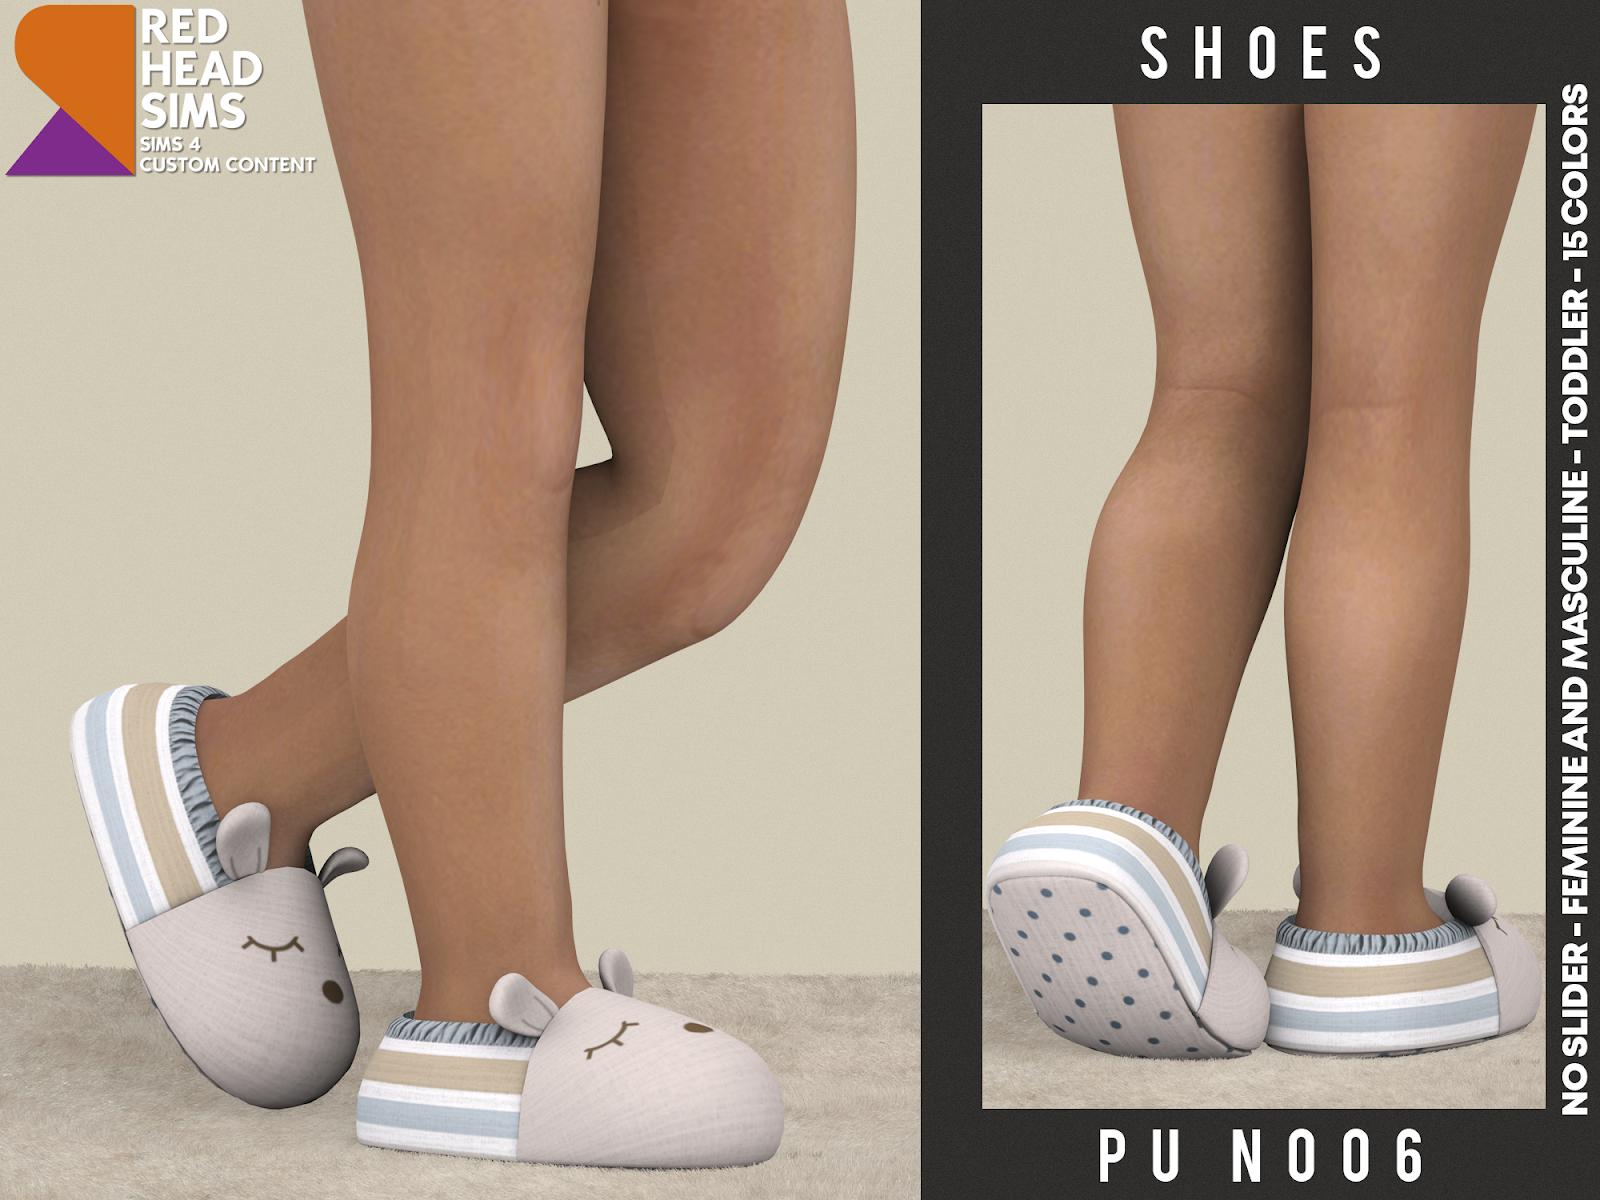 Pu Shoes N006 No Slider Toddler Redheadsims Cc